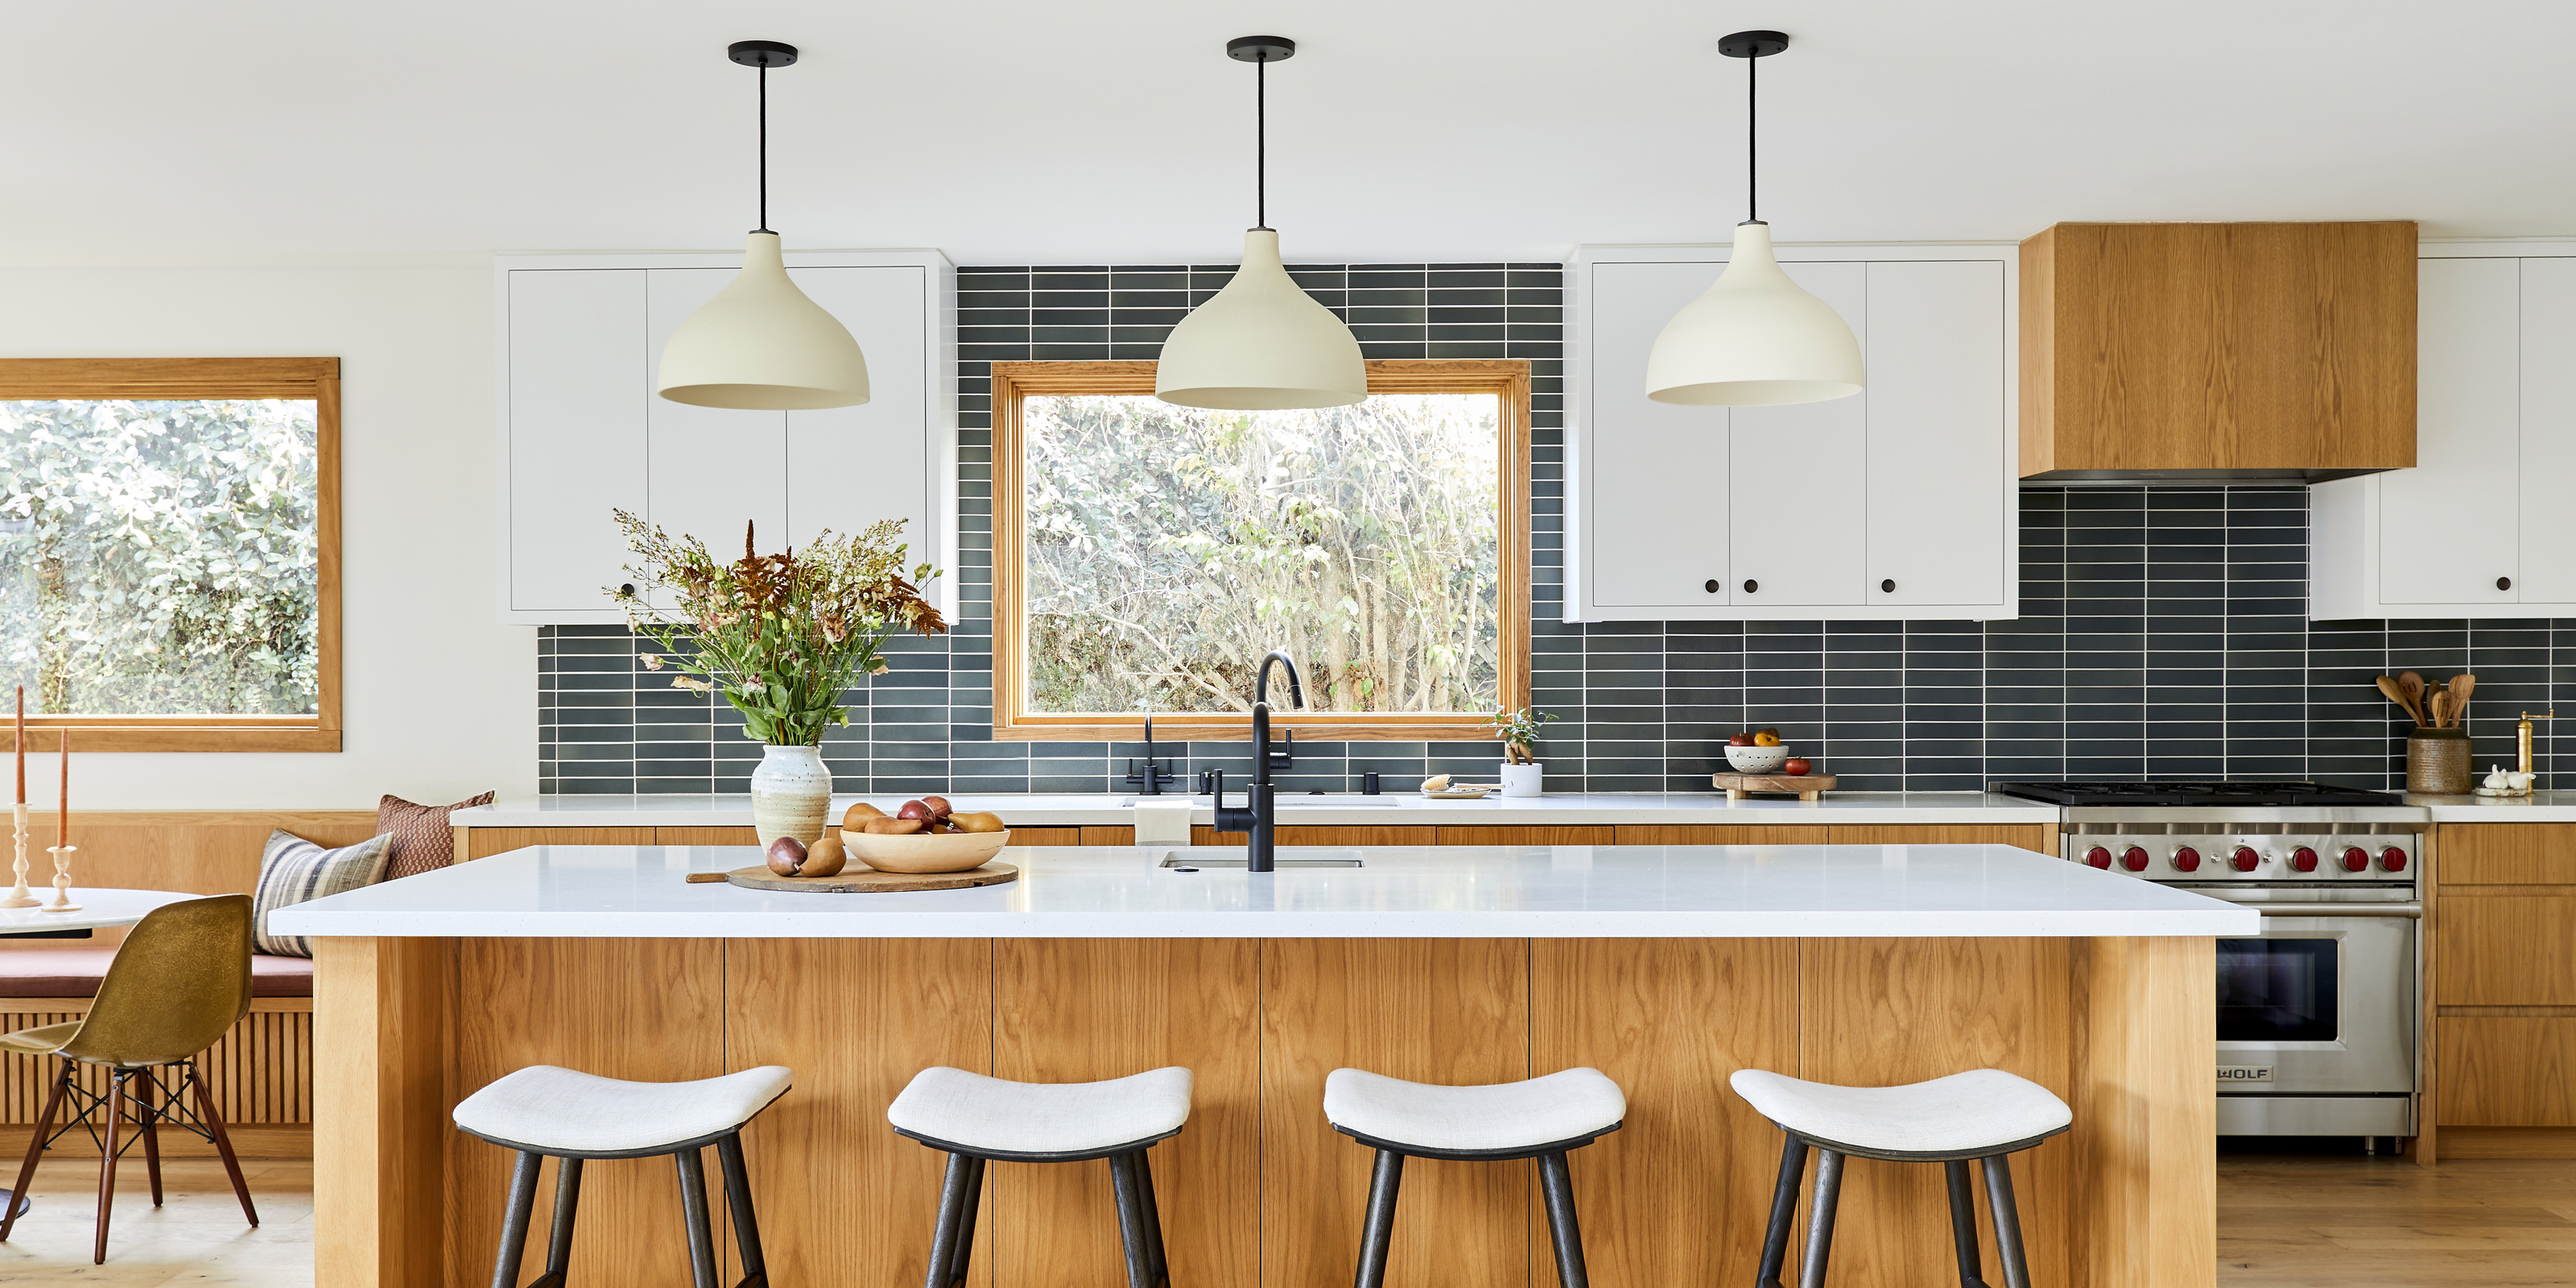 Kitchen lighting ideas 20 lights designs to set the scene   Homes ...